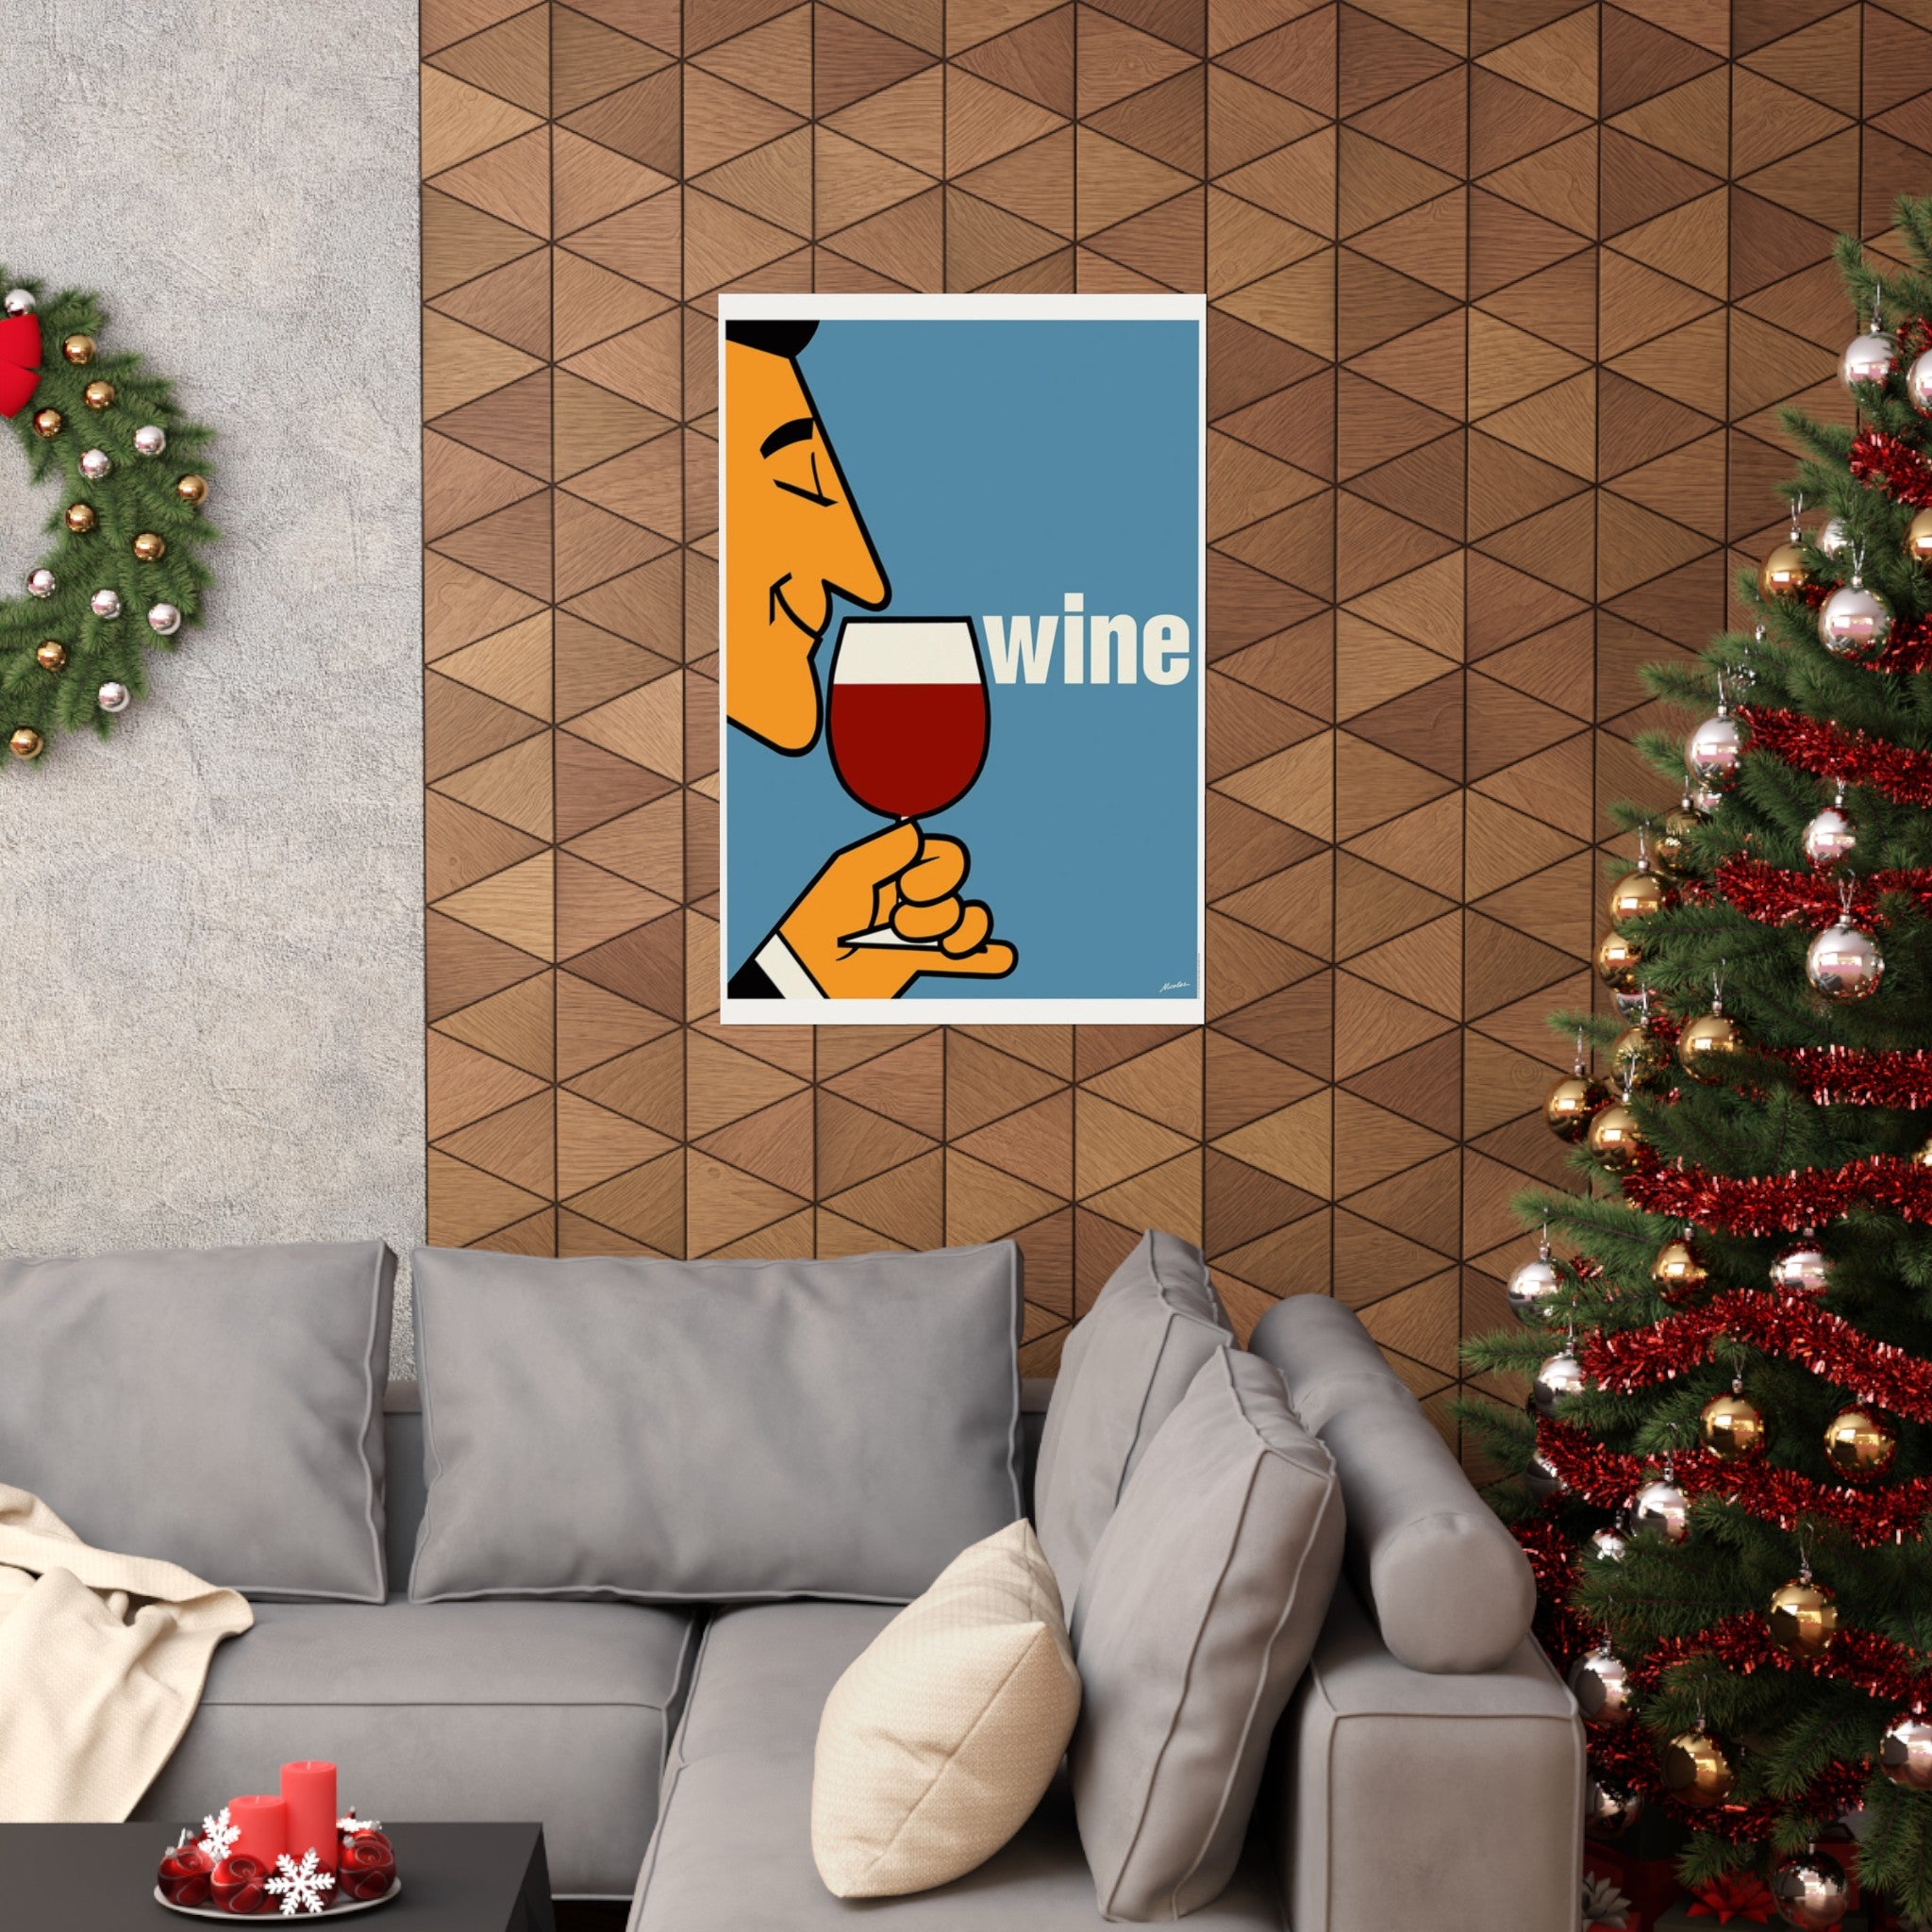 Wine Wall Print | Retro Advertising Print